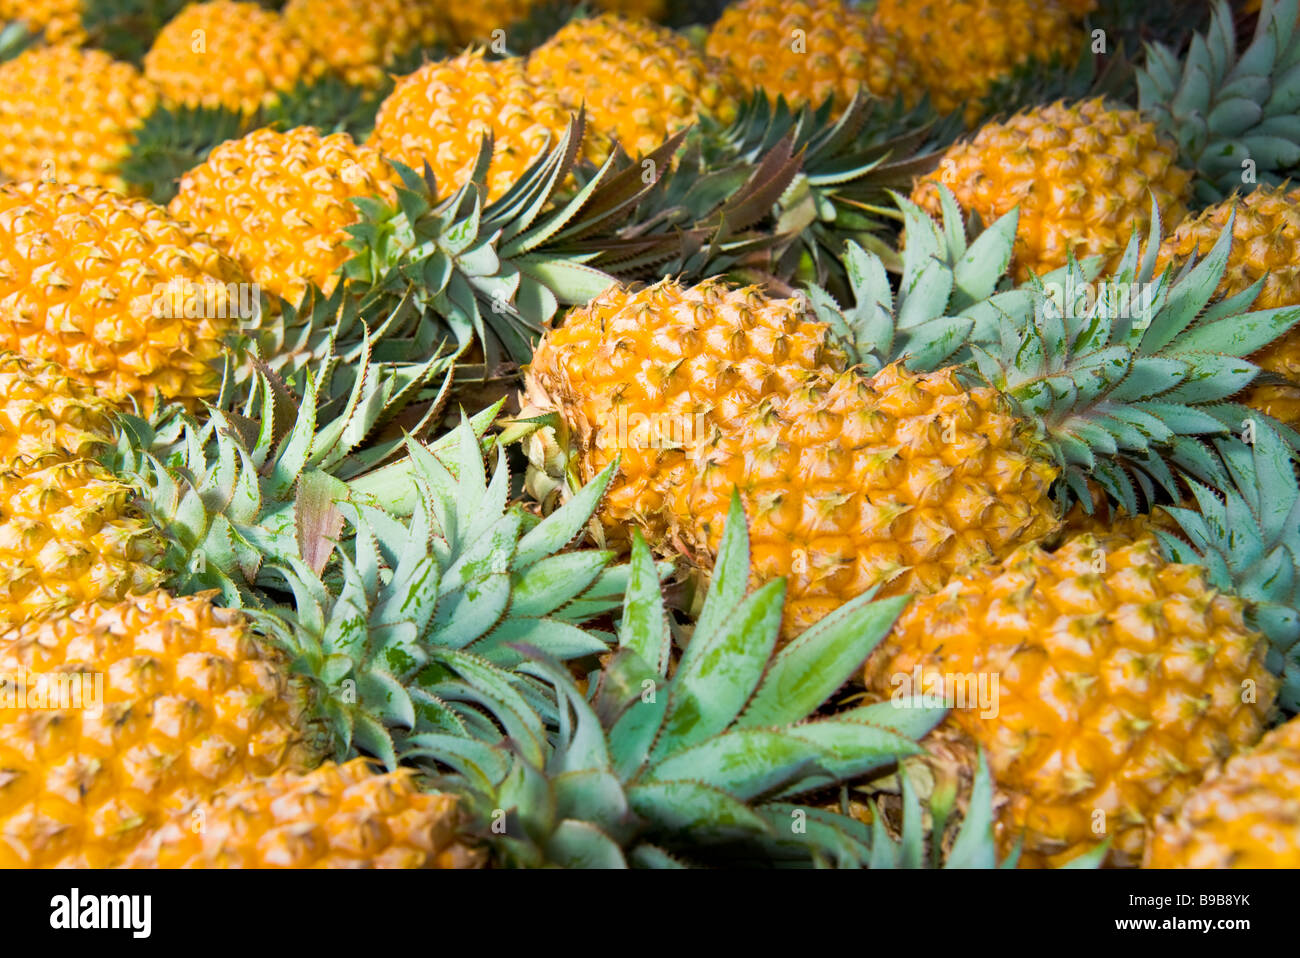 Ripe pineapple food market La Réunion France | Reife Ananas auf einem Markt in La Réunion Stock Photo